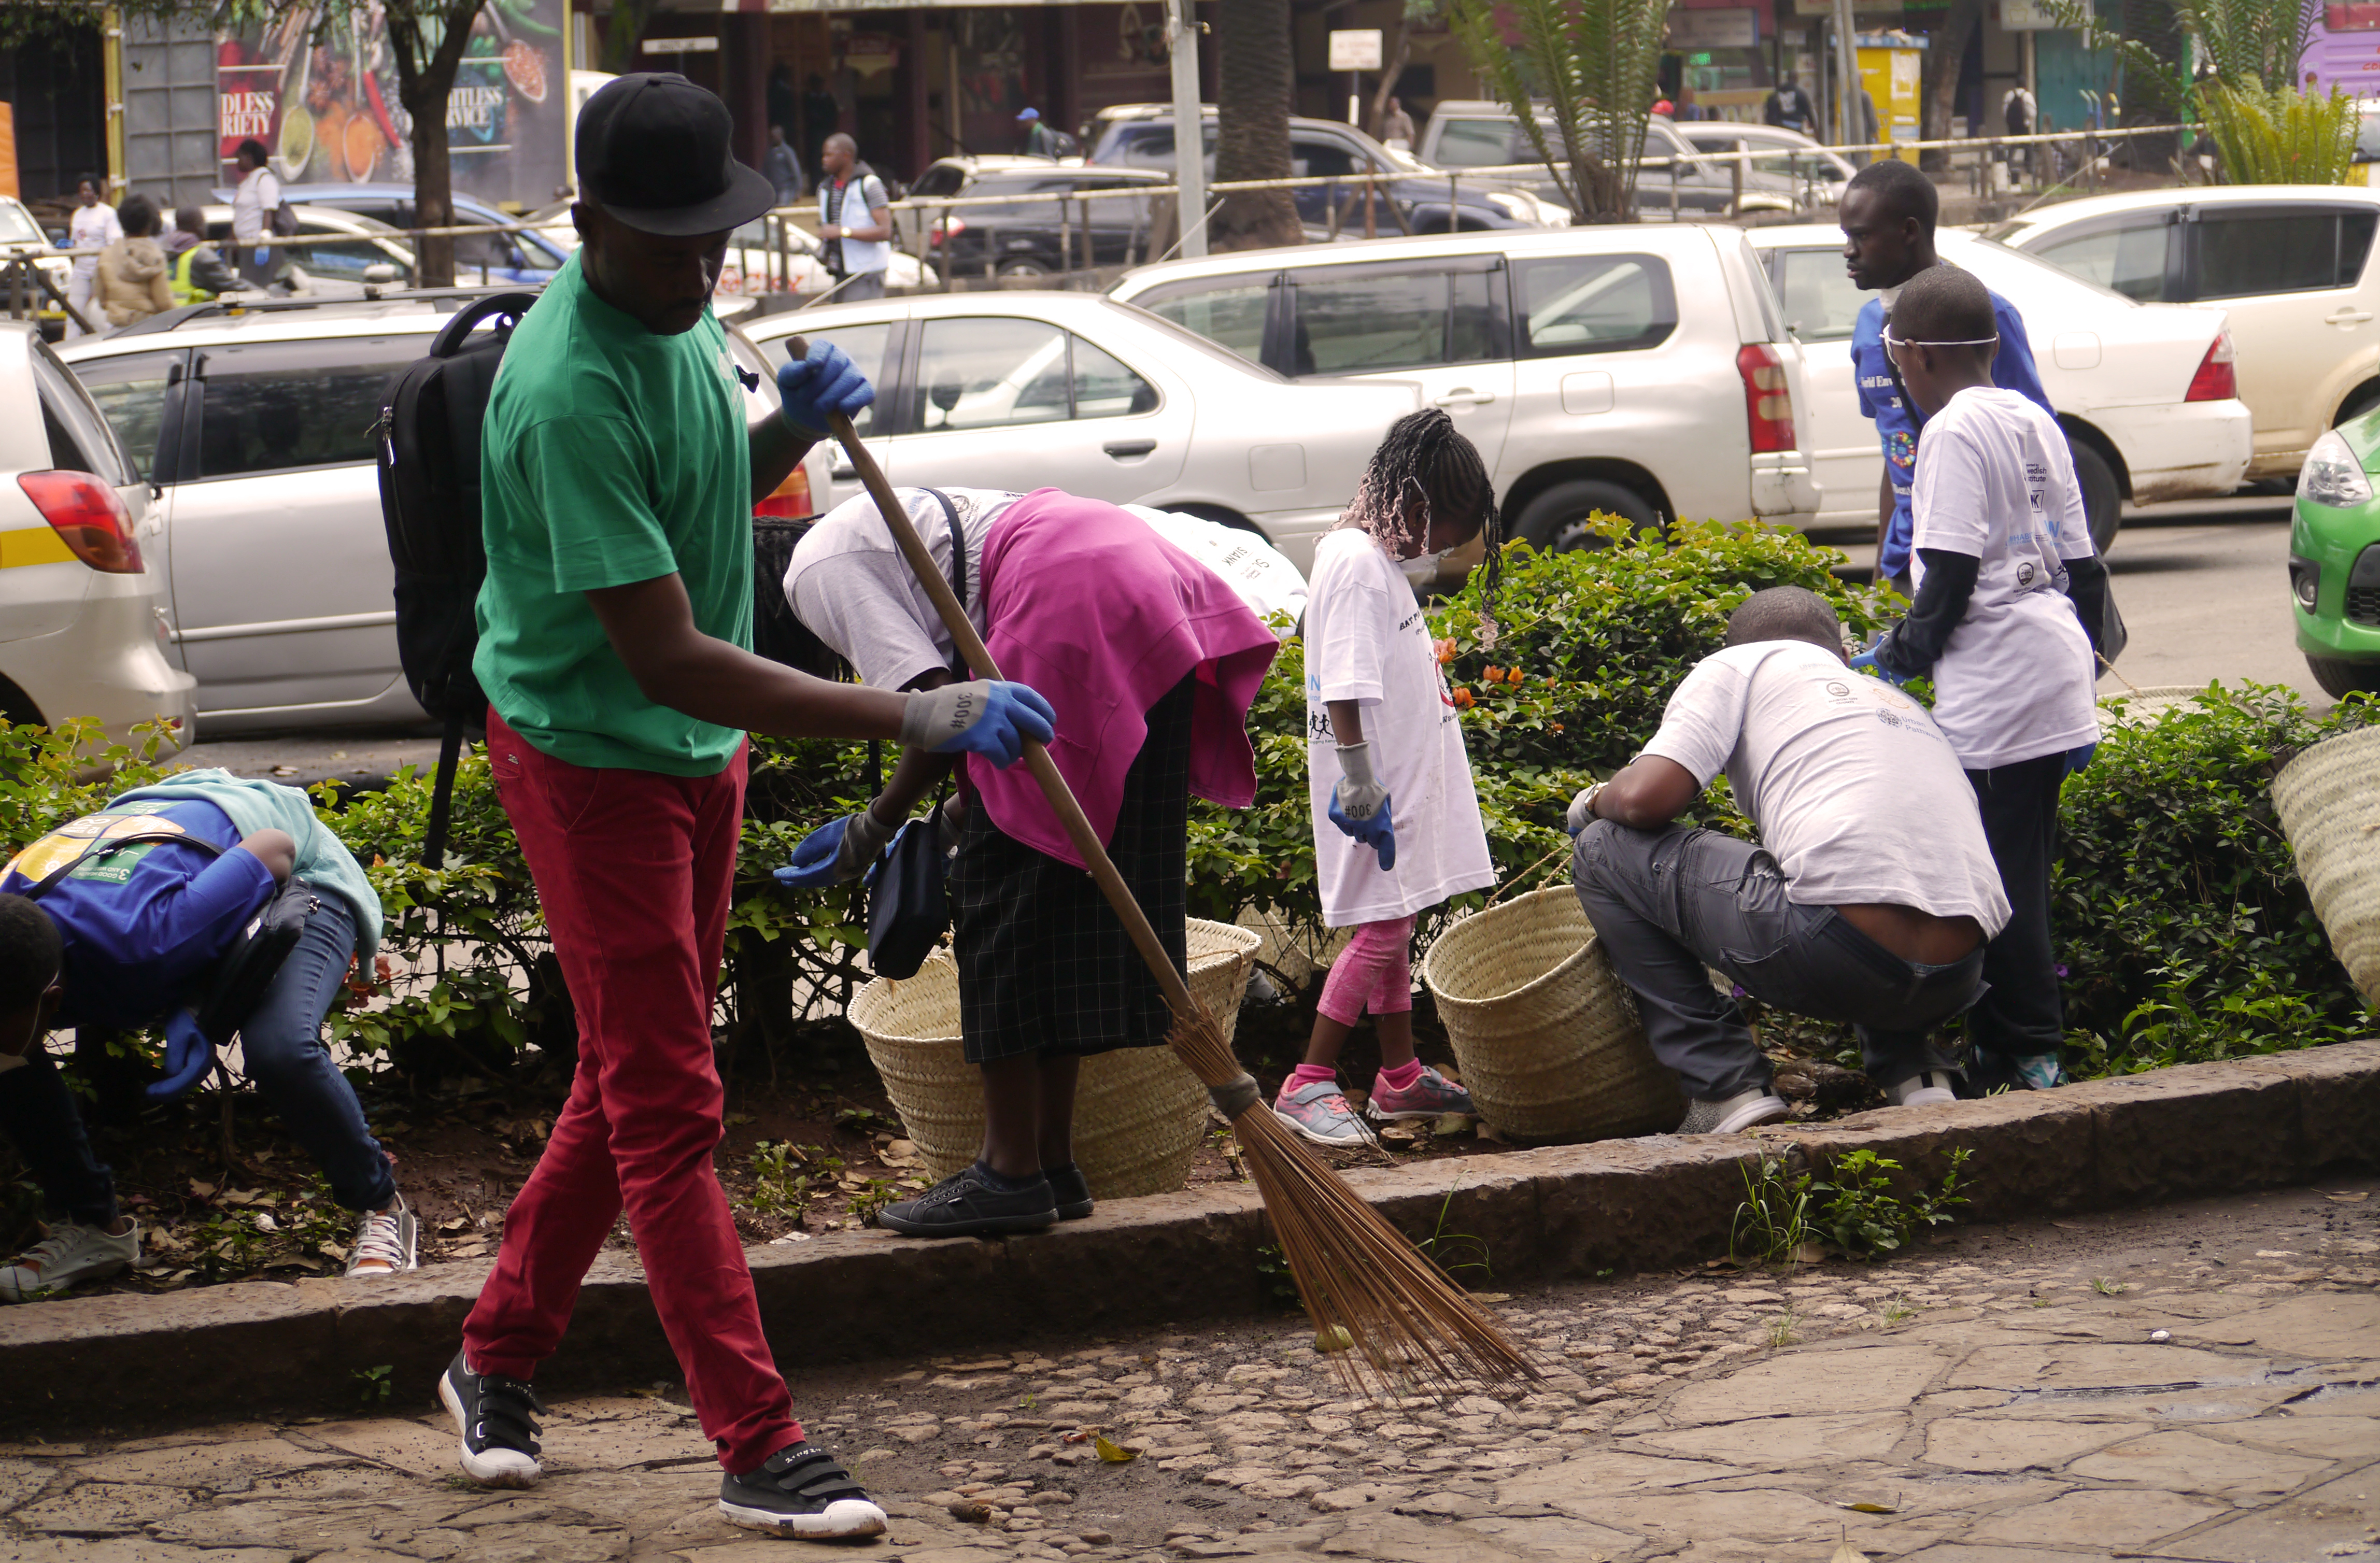 UN-Habitat promotes a cleaner Nairobi through a Plogging Event to beat plastic pollution